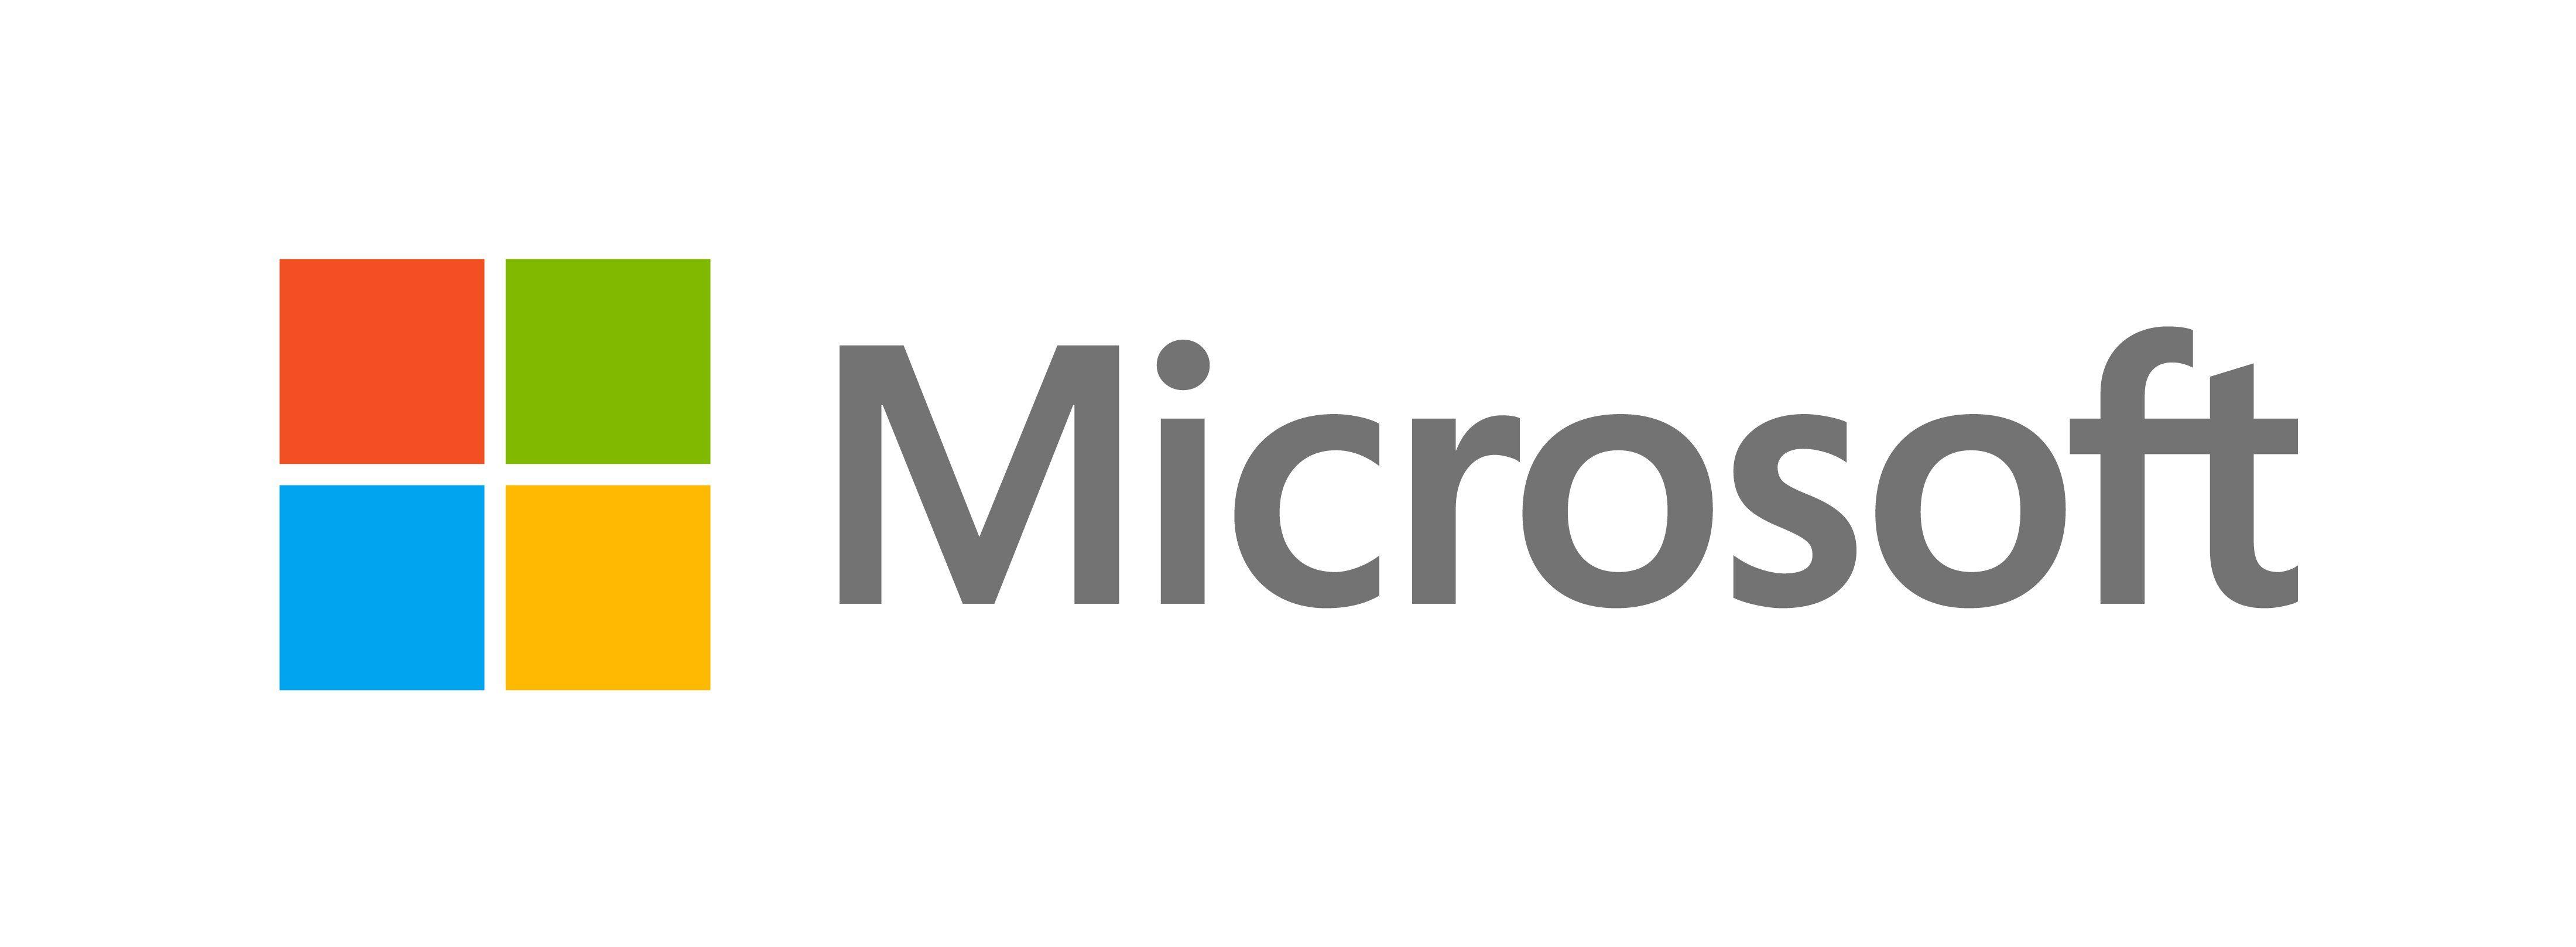 Windows Surface Logo - Microsoft logo 2017. art draw. Microsoft, Software, Technology